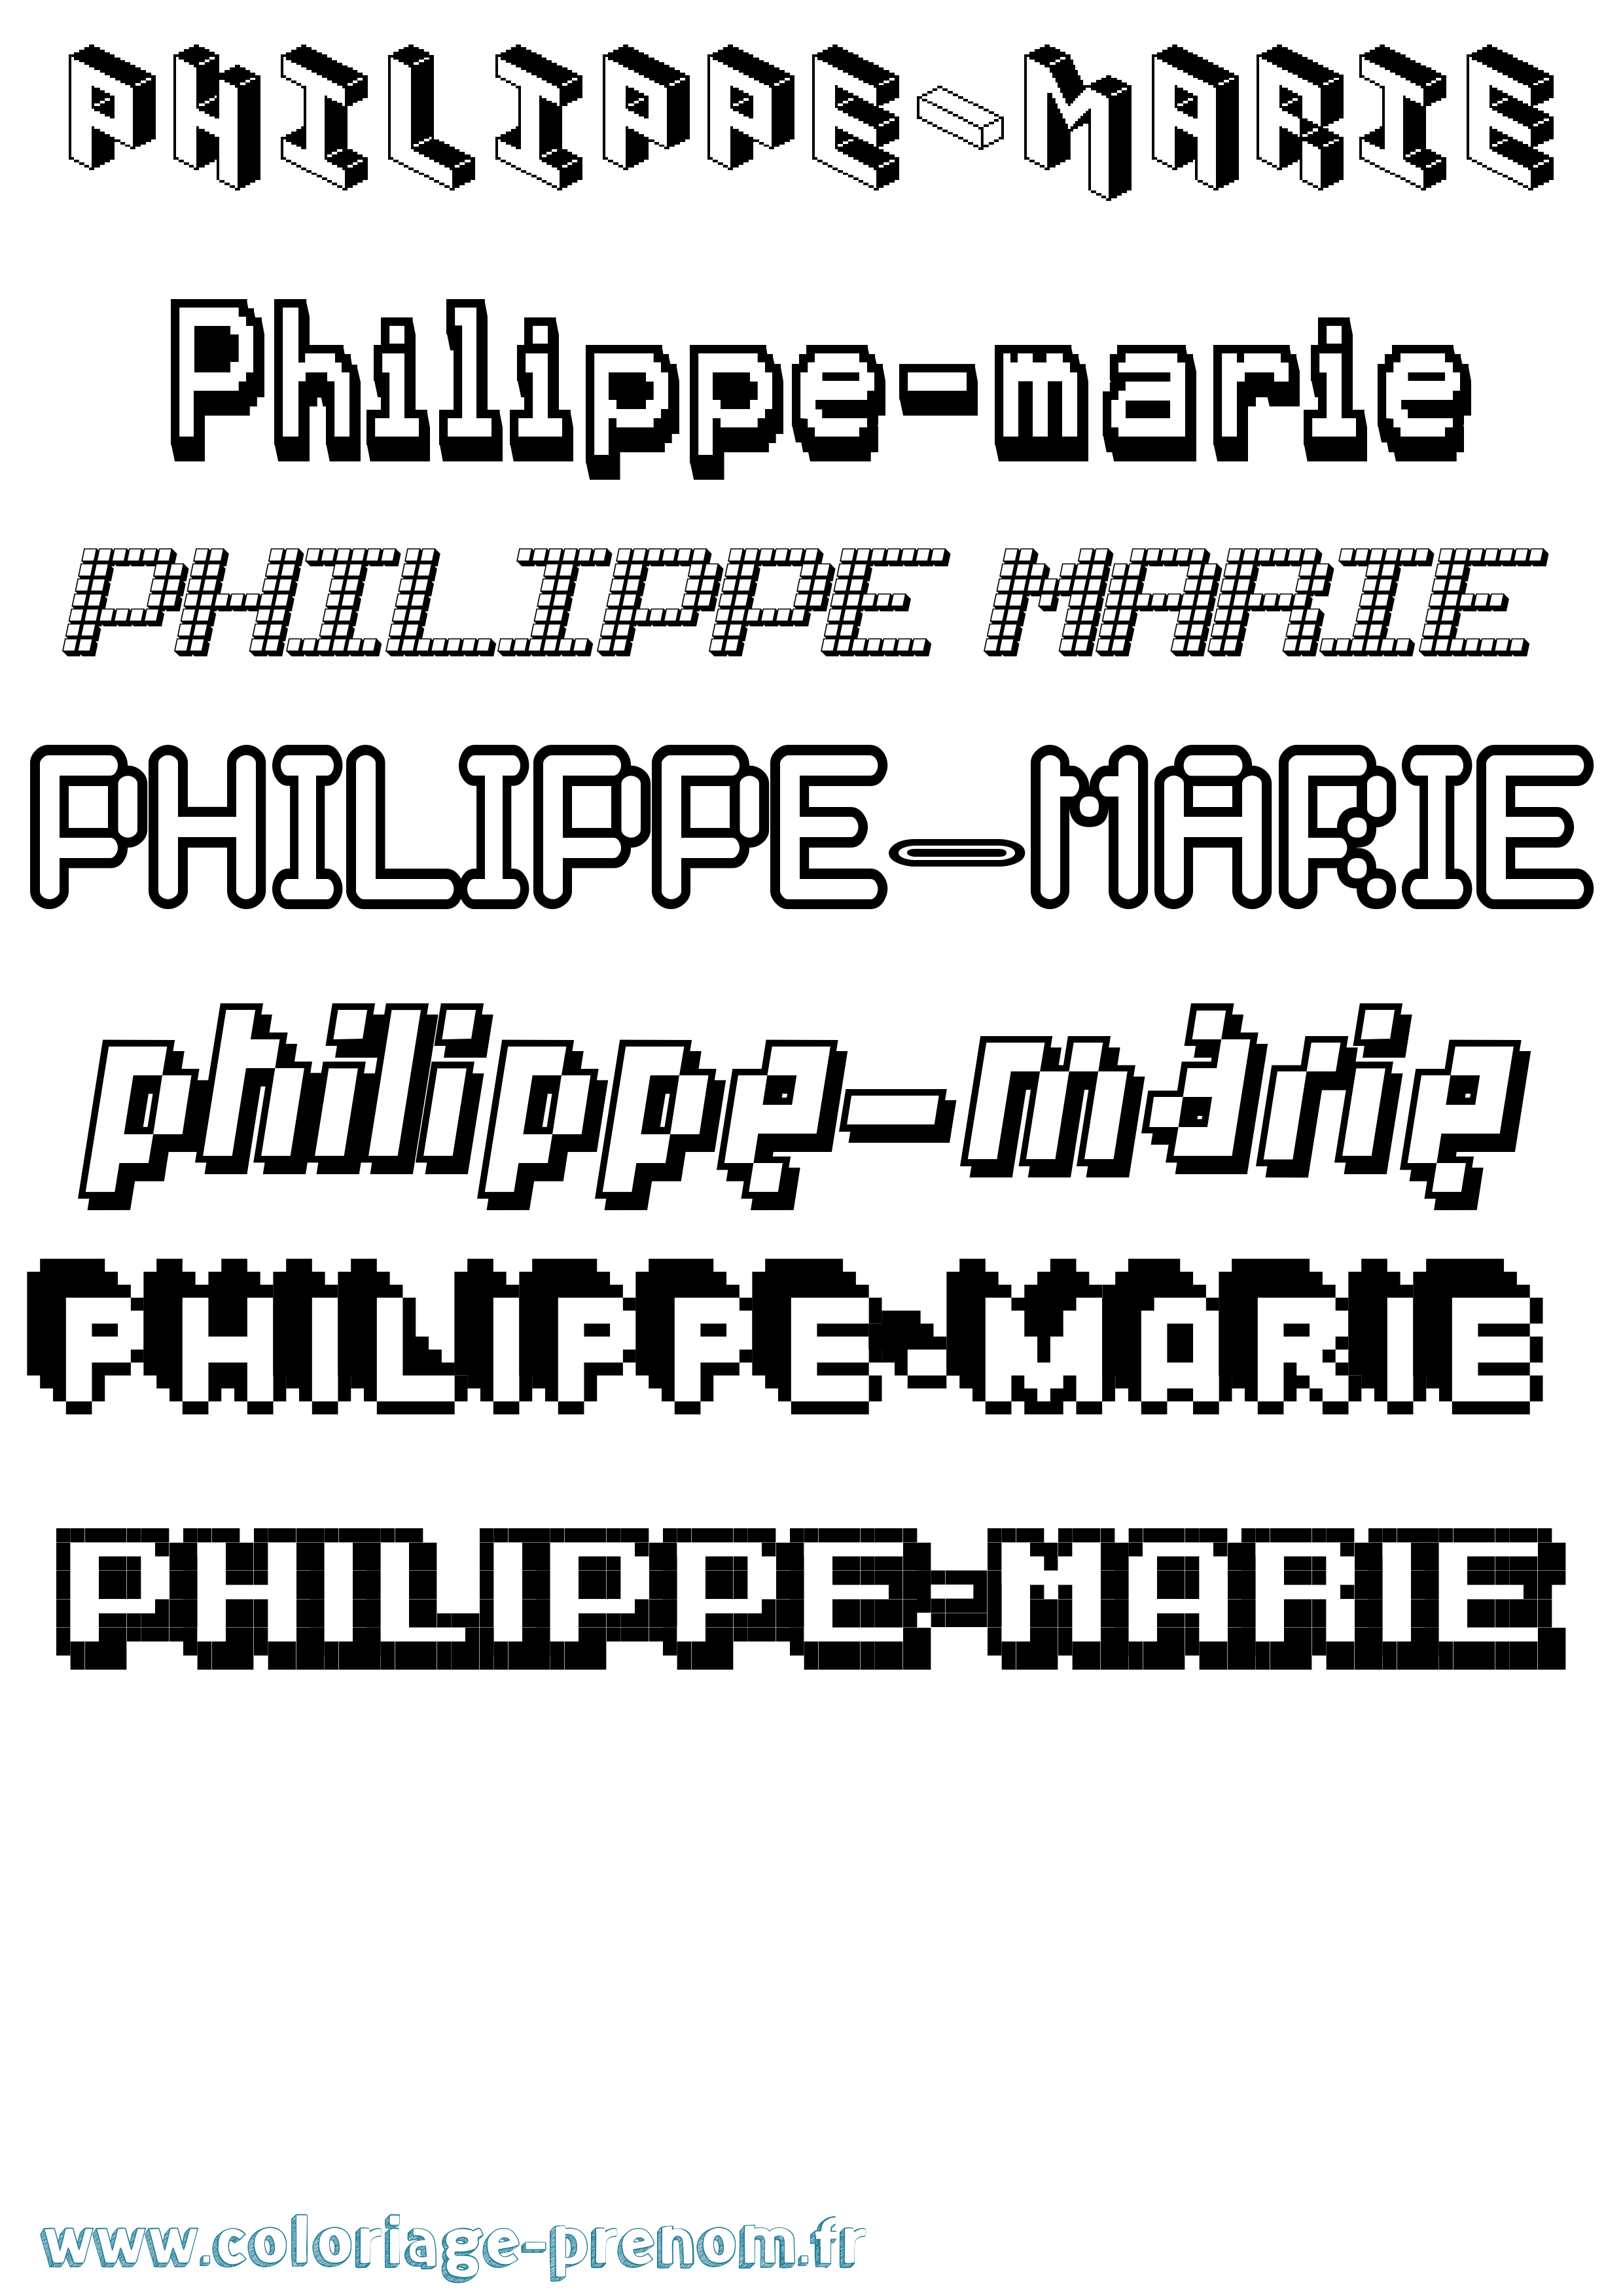 Coloriage prénom Philippe-Marie Pixel